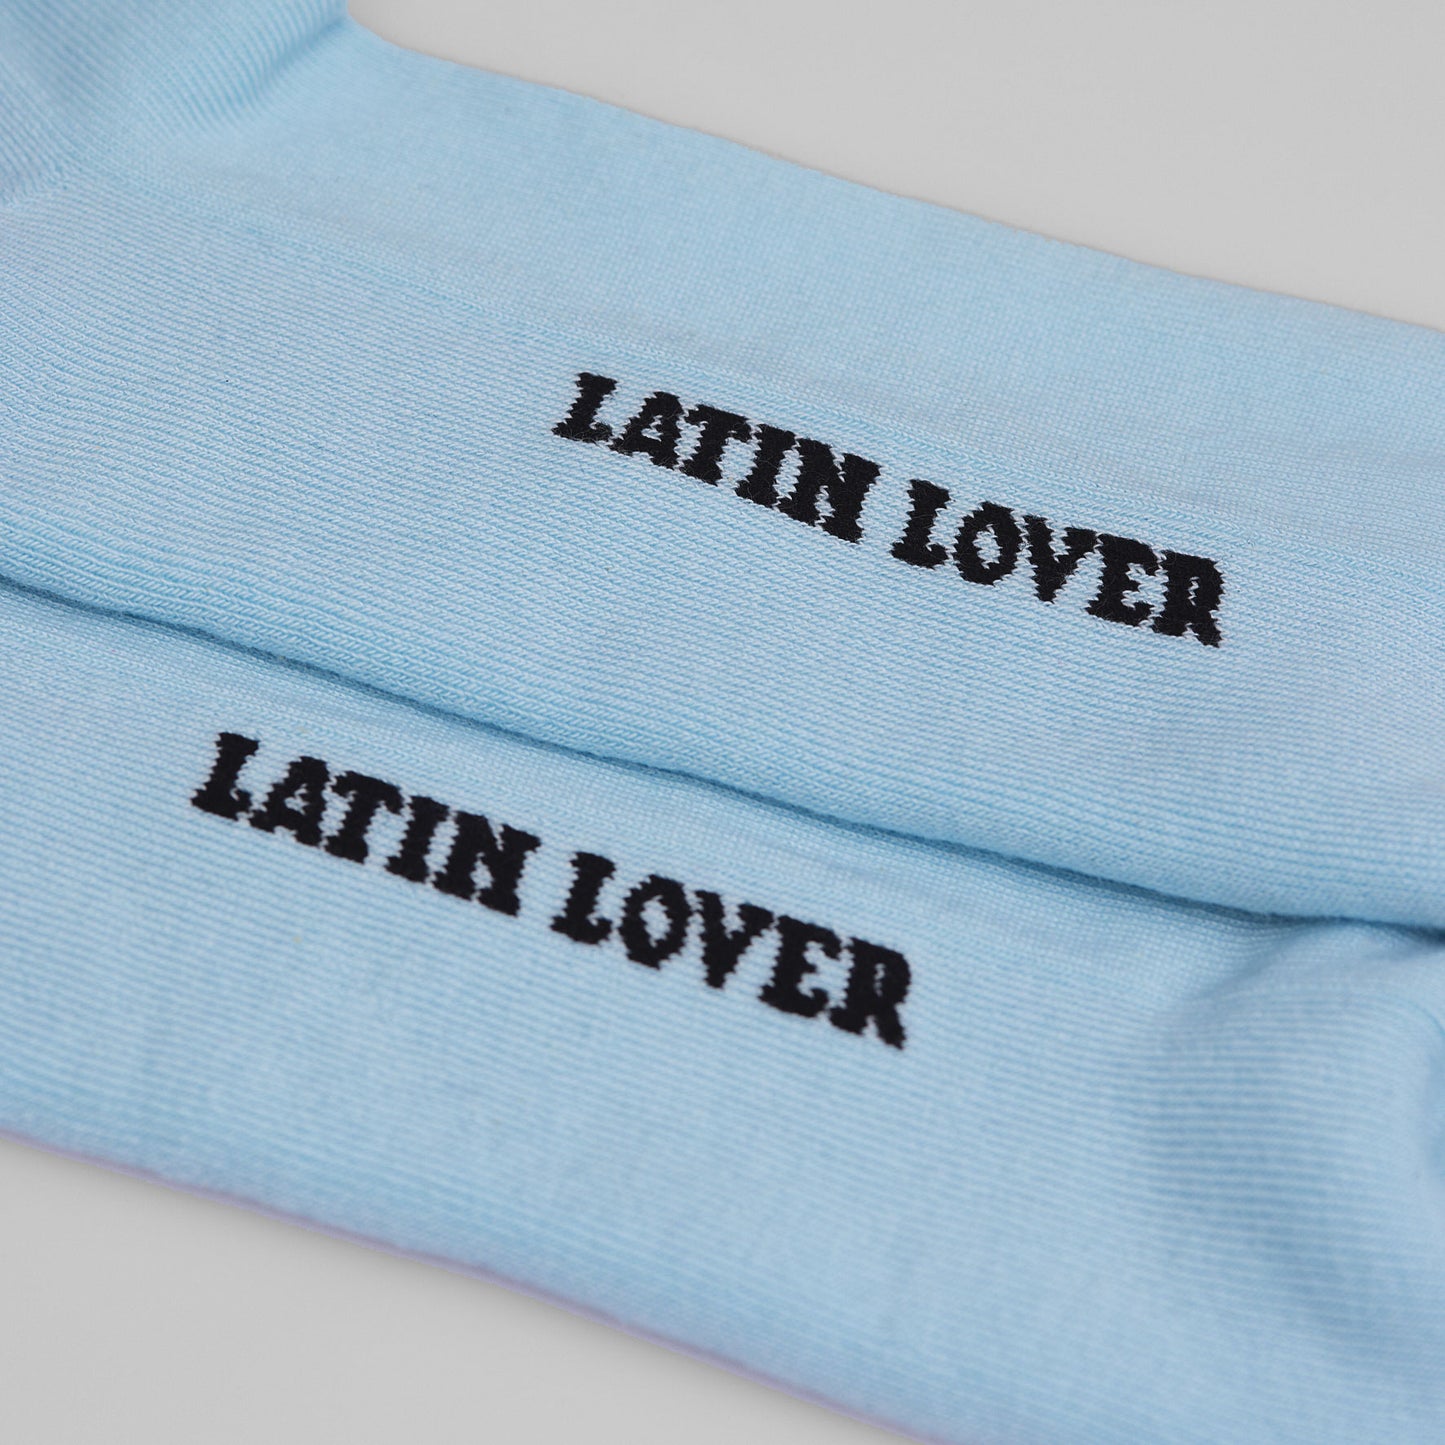 soy-latin-lover-medias-hombre-mujer-basica-light-blue.jpg